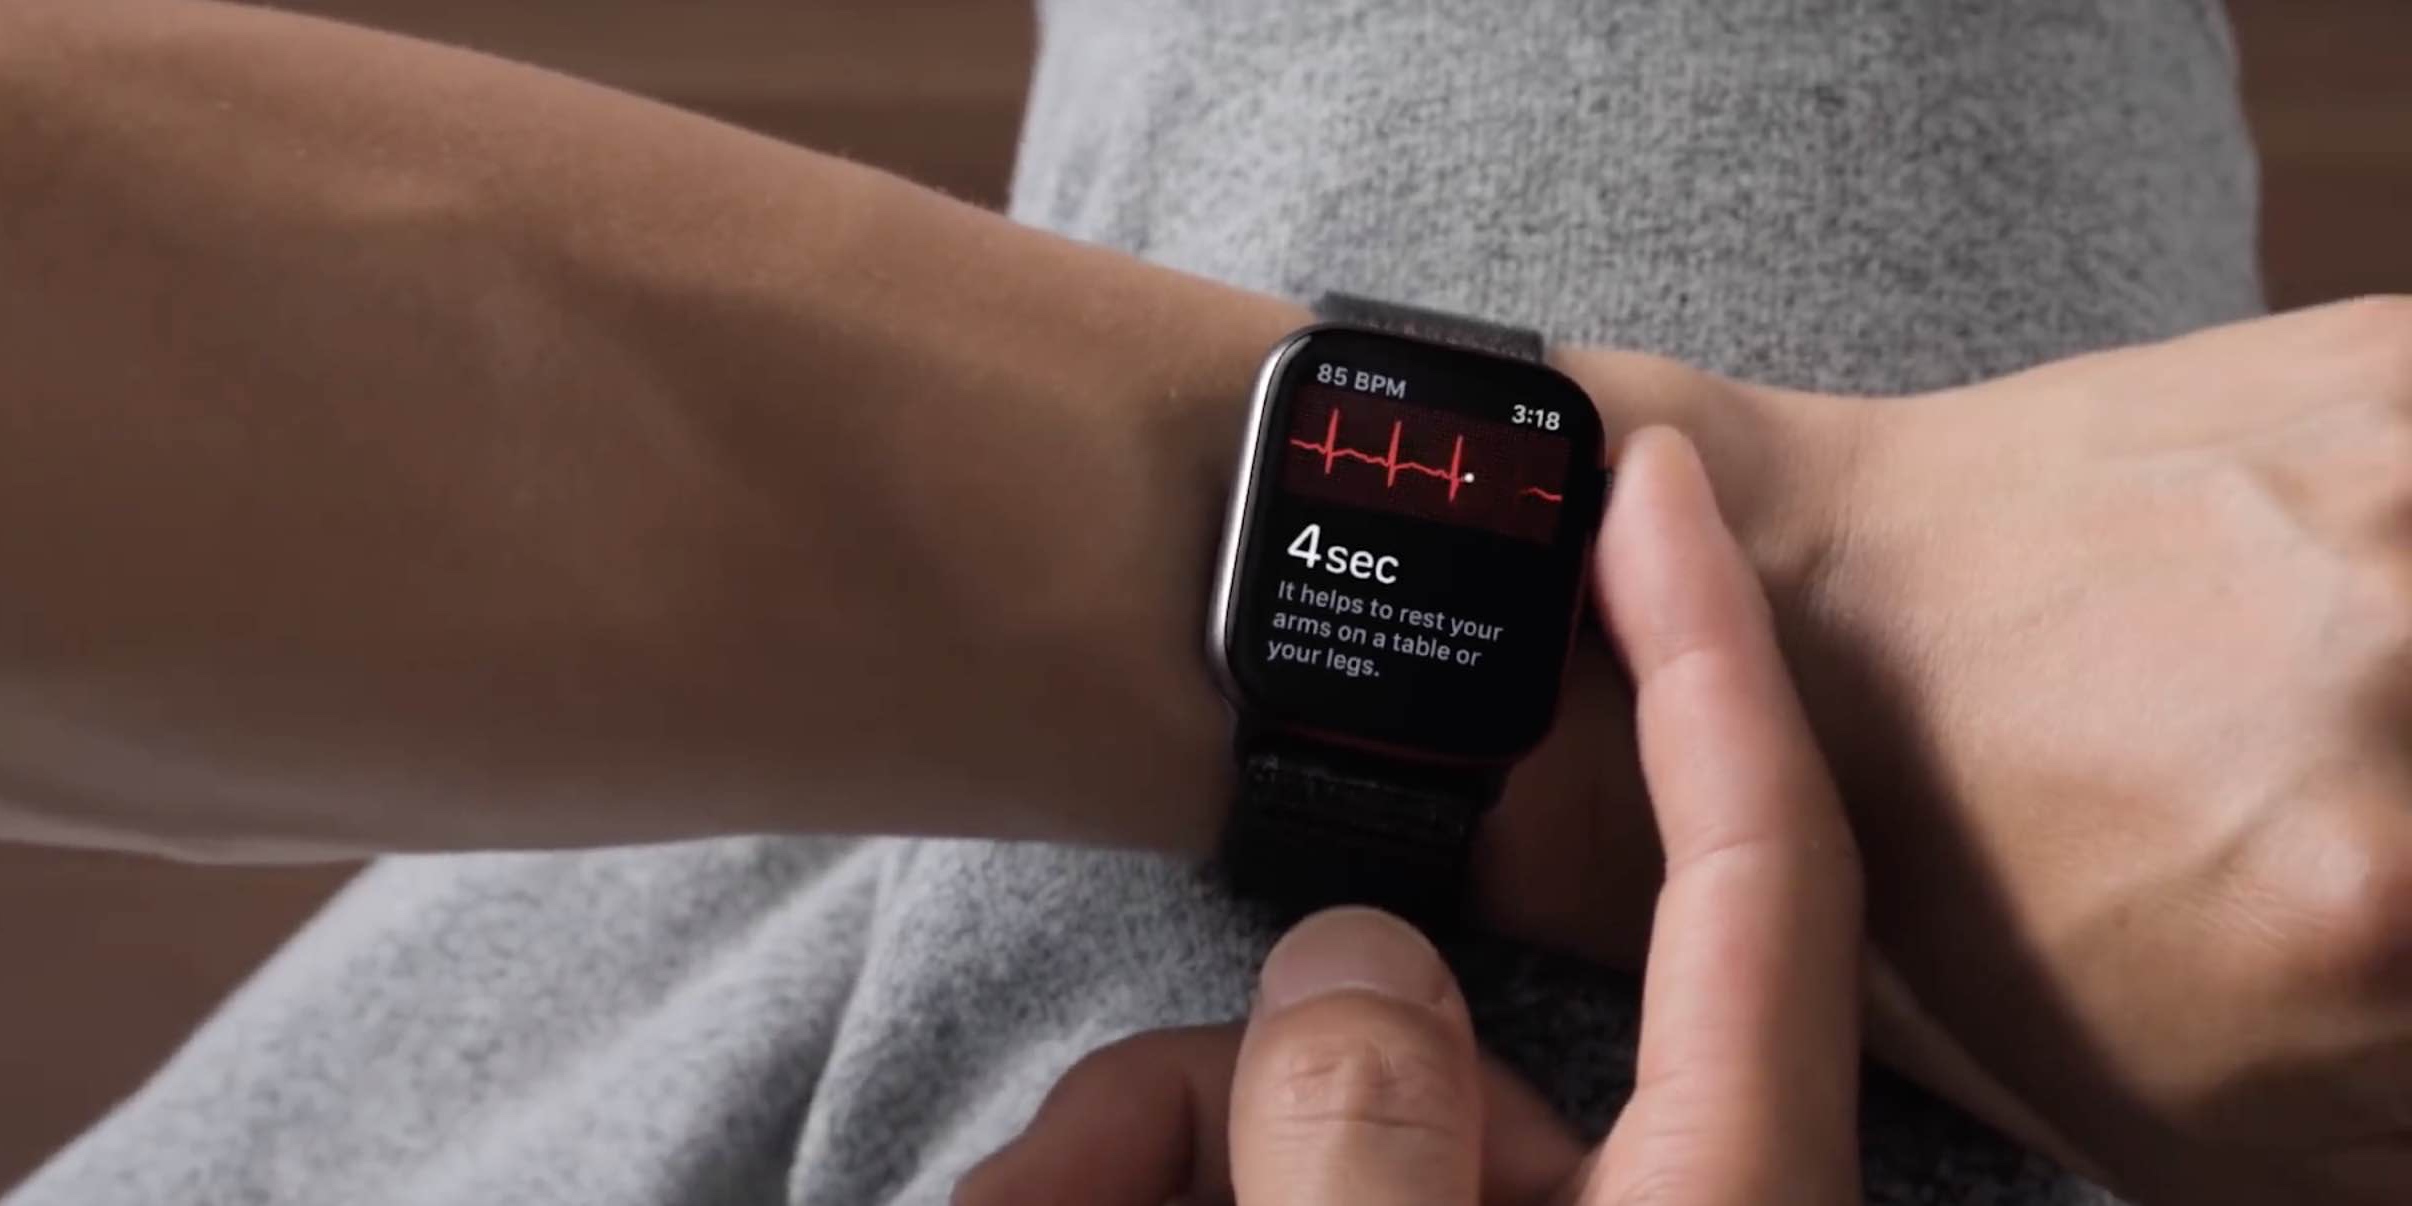 electrocardiogram app for apple watch